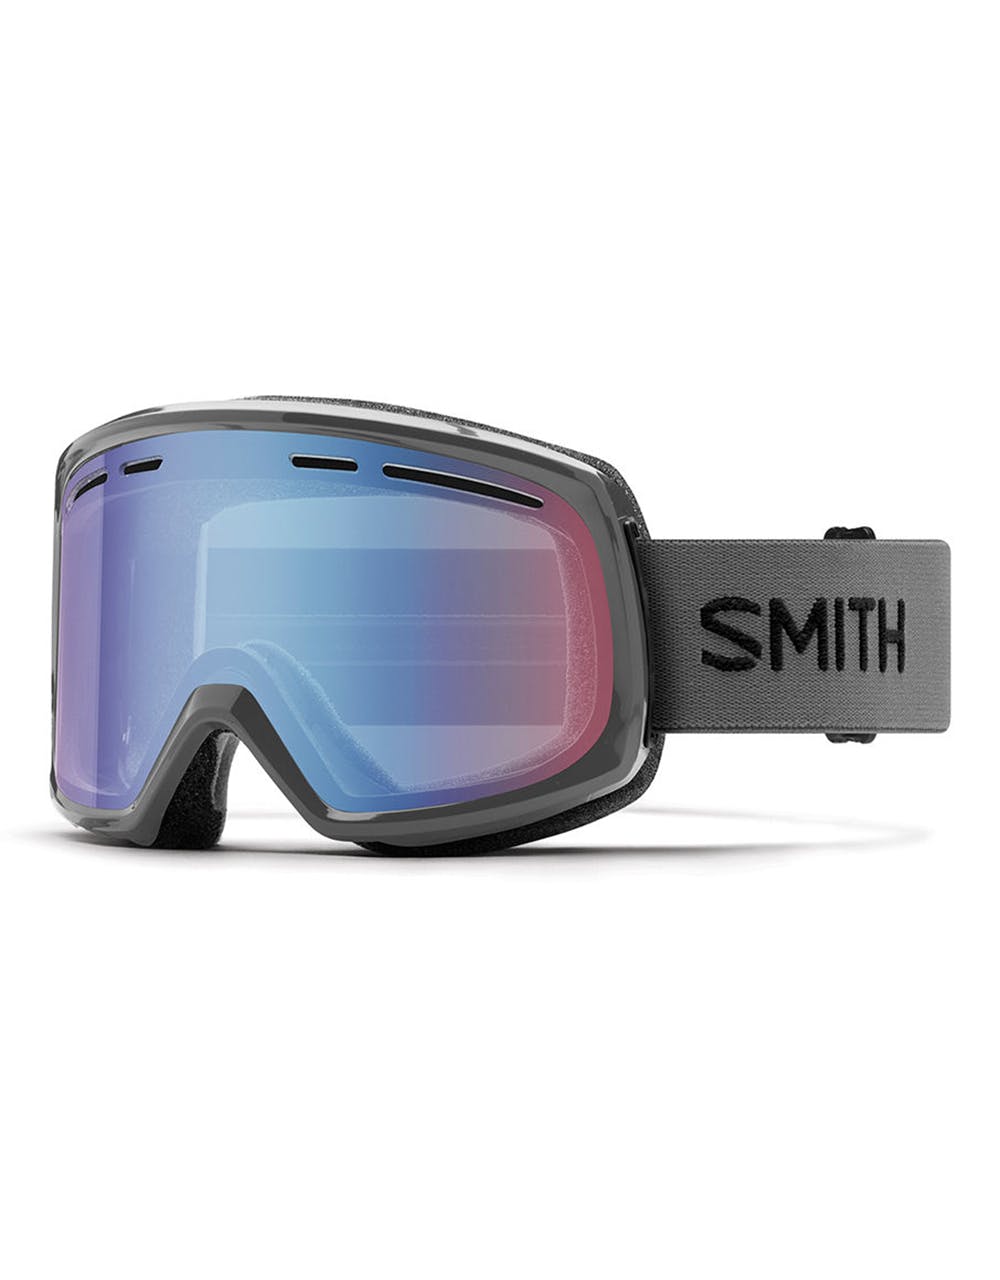 Smith Range Snowboard Goggles - Charcoal/Blue Sensor Mirror